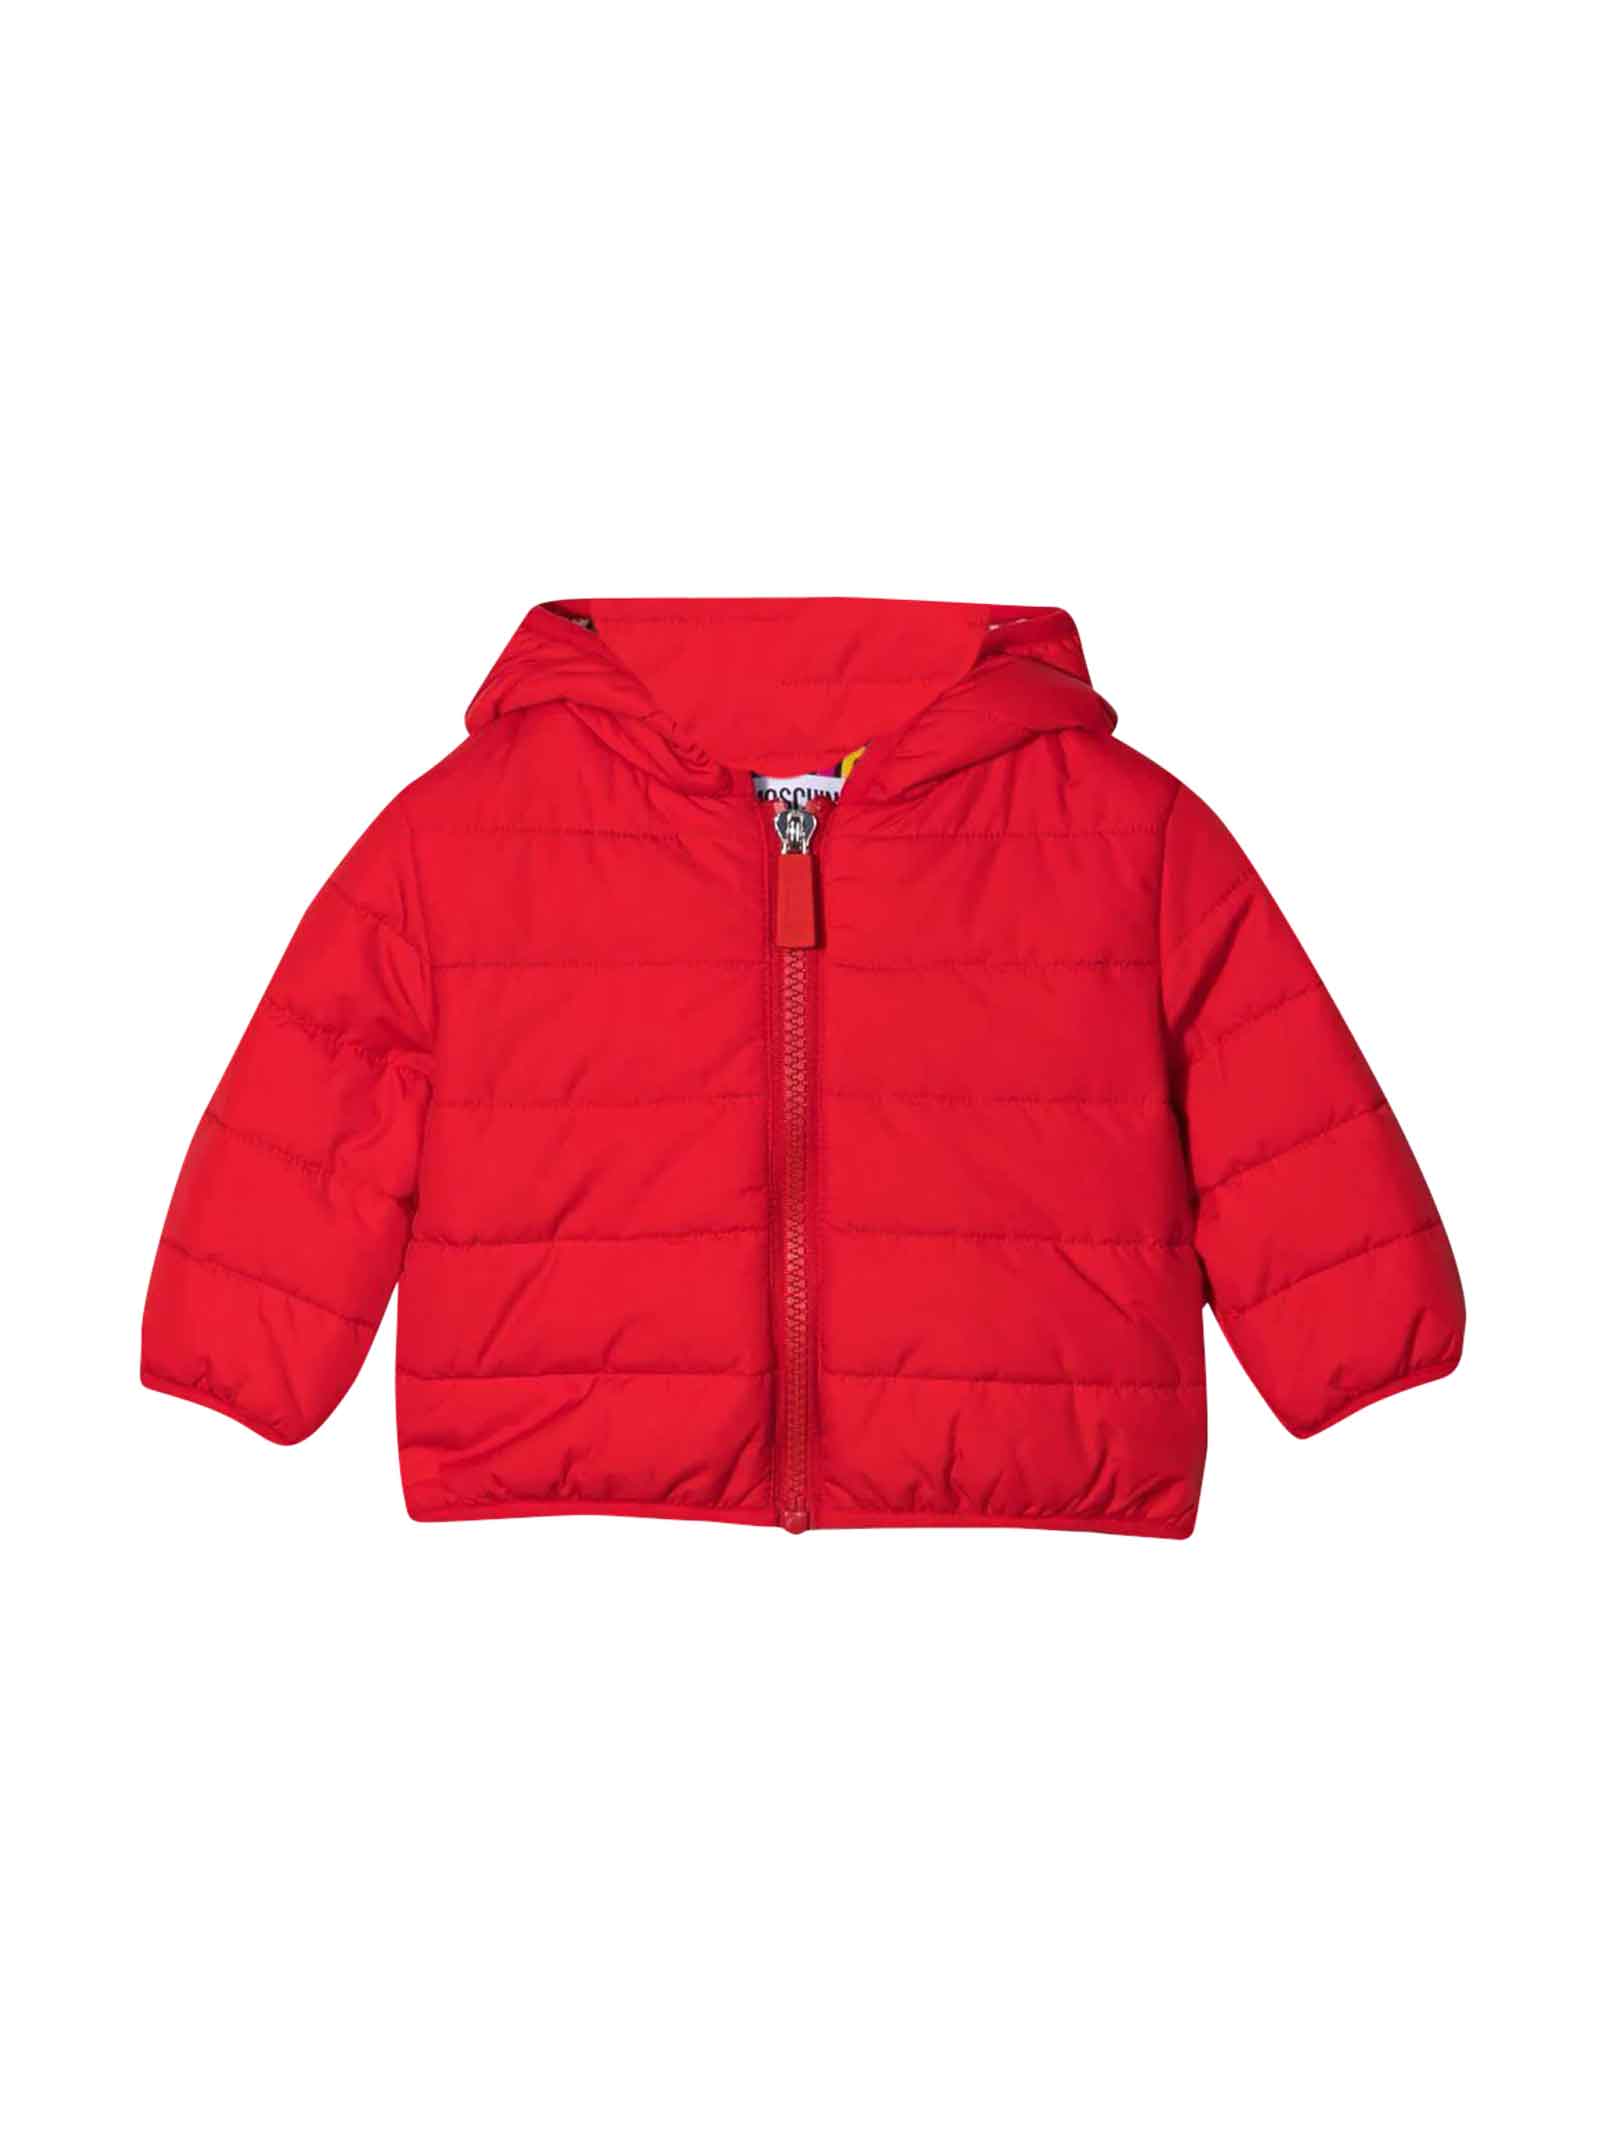 Moschino Unisex Red Down Jacket